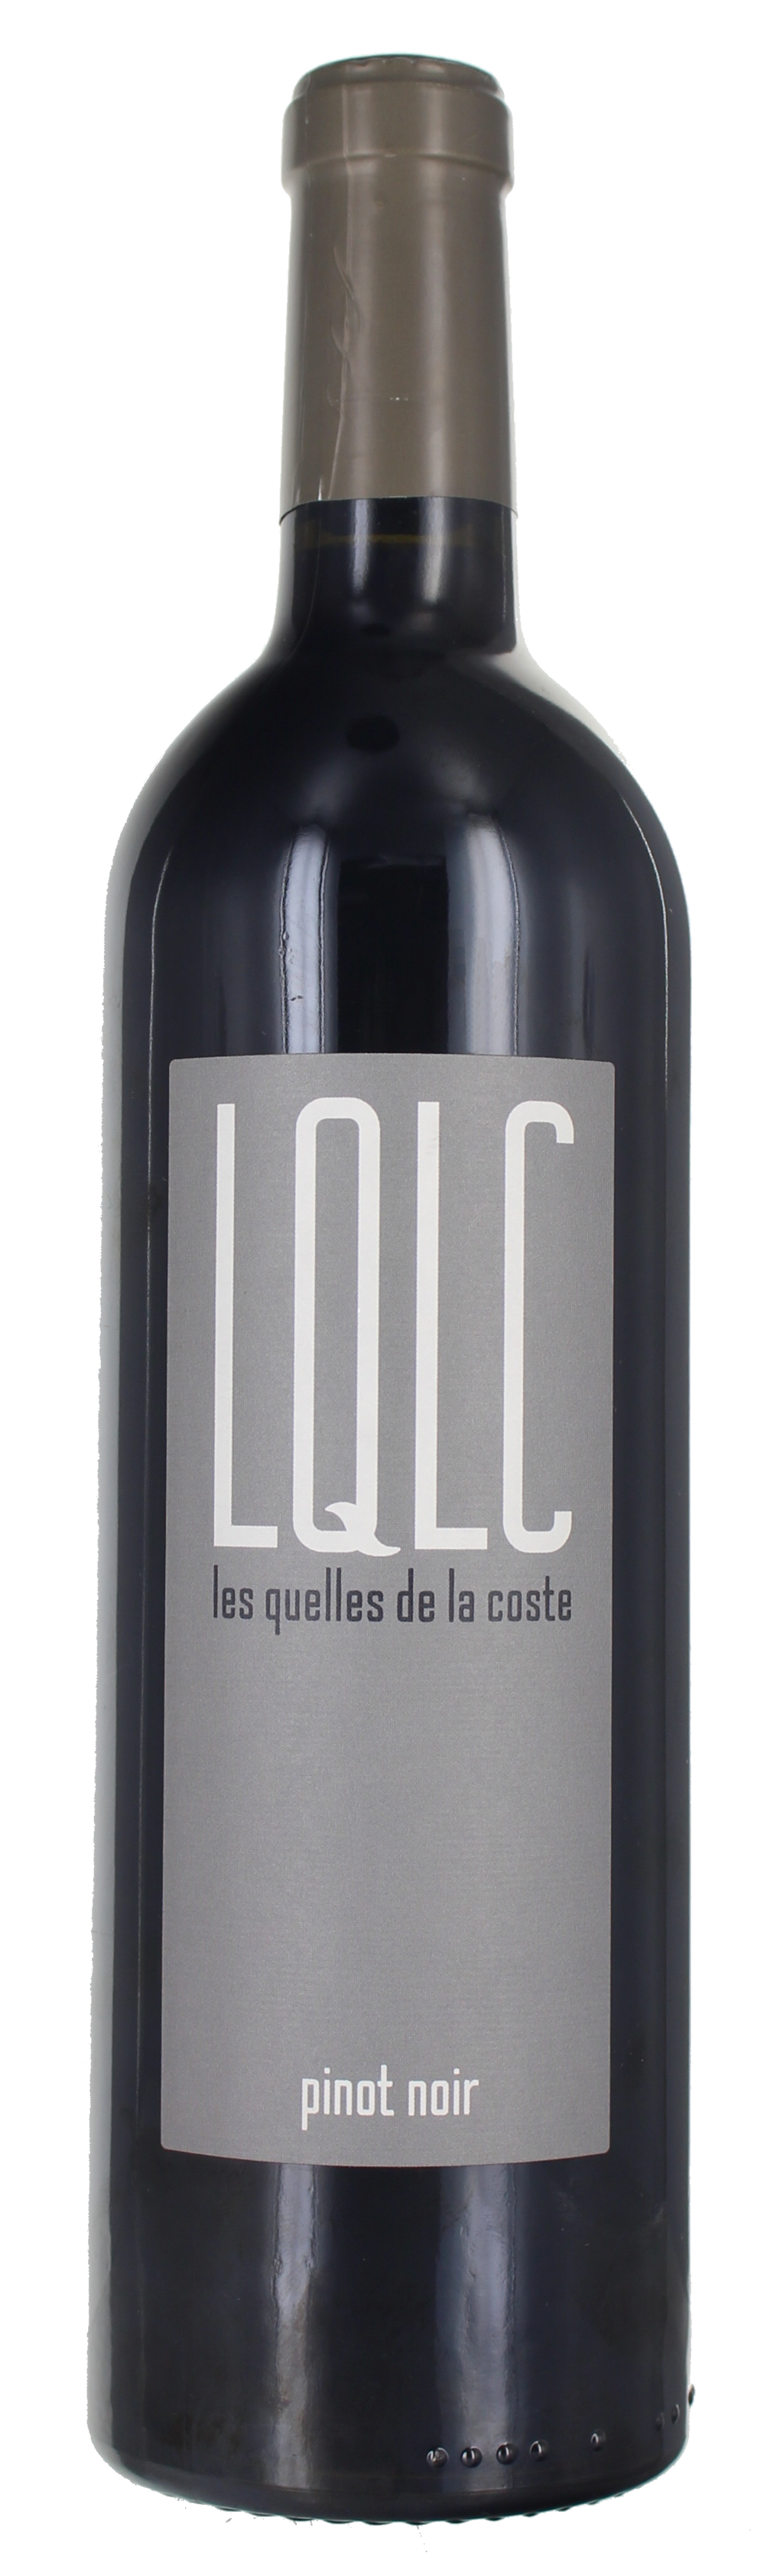 LQLC Pinot Noir 2018 75cl